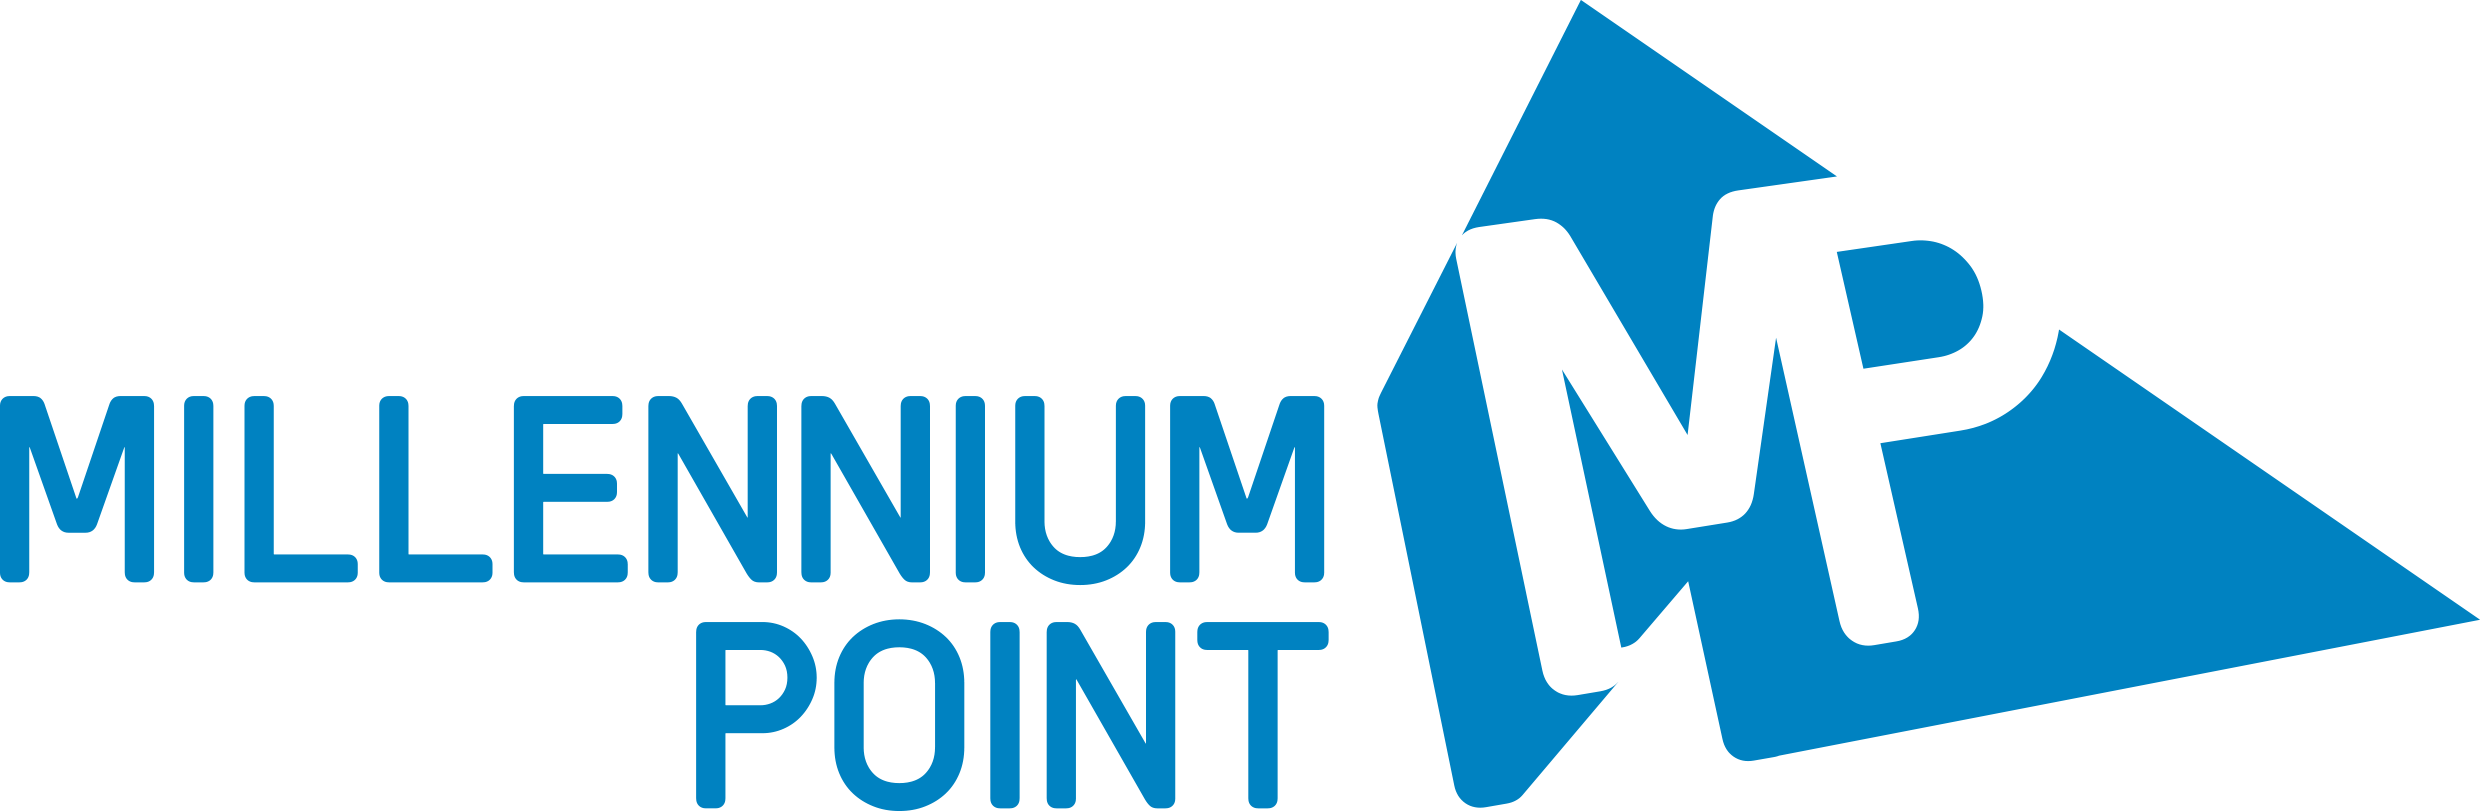 Millennium Point logo | TheBusinessDesk.com